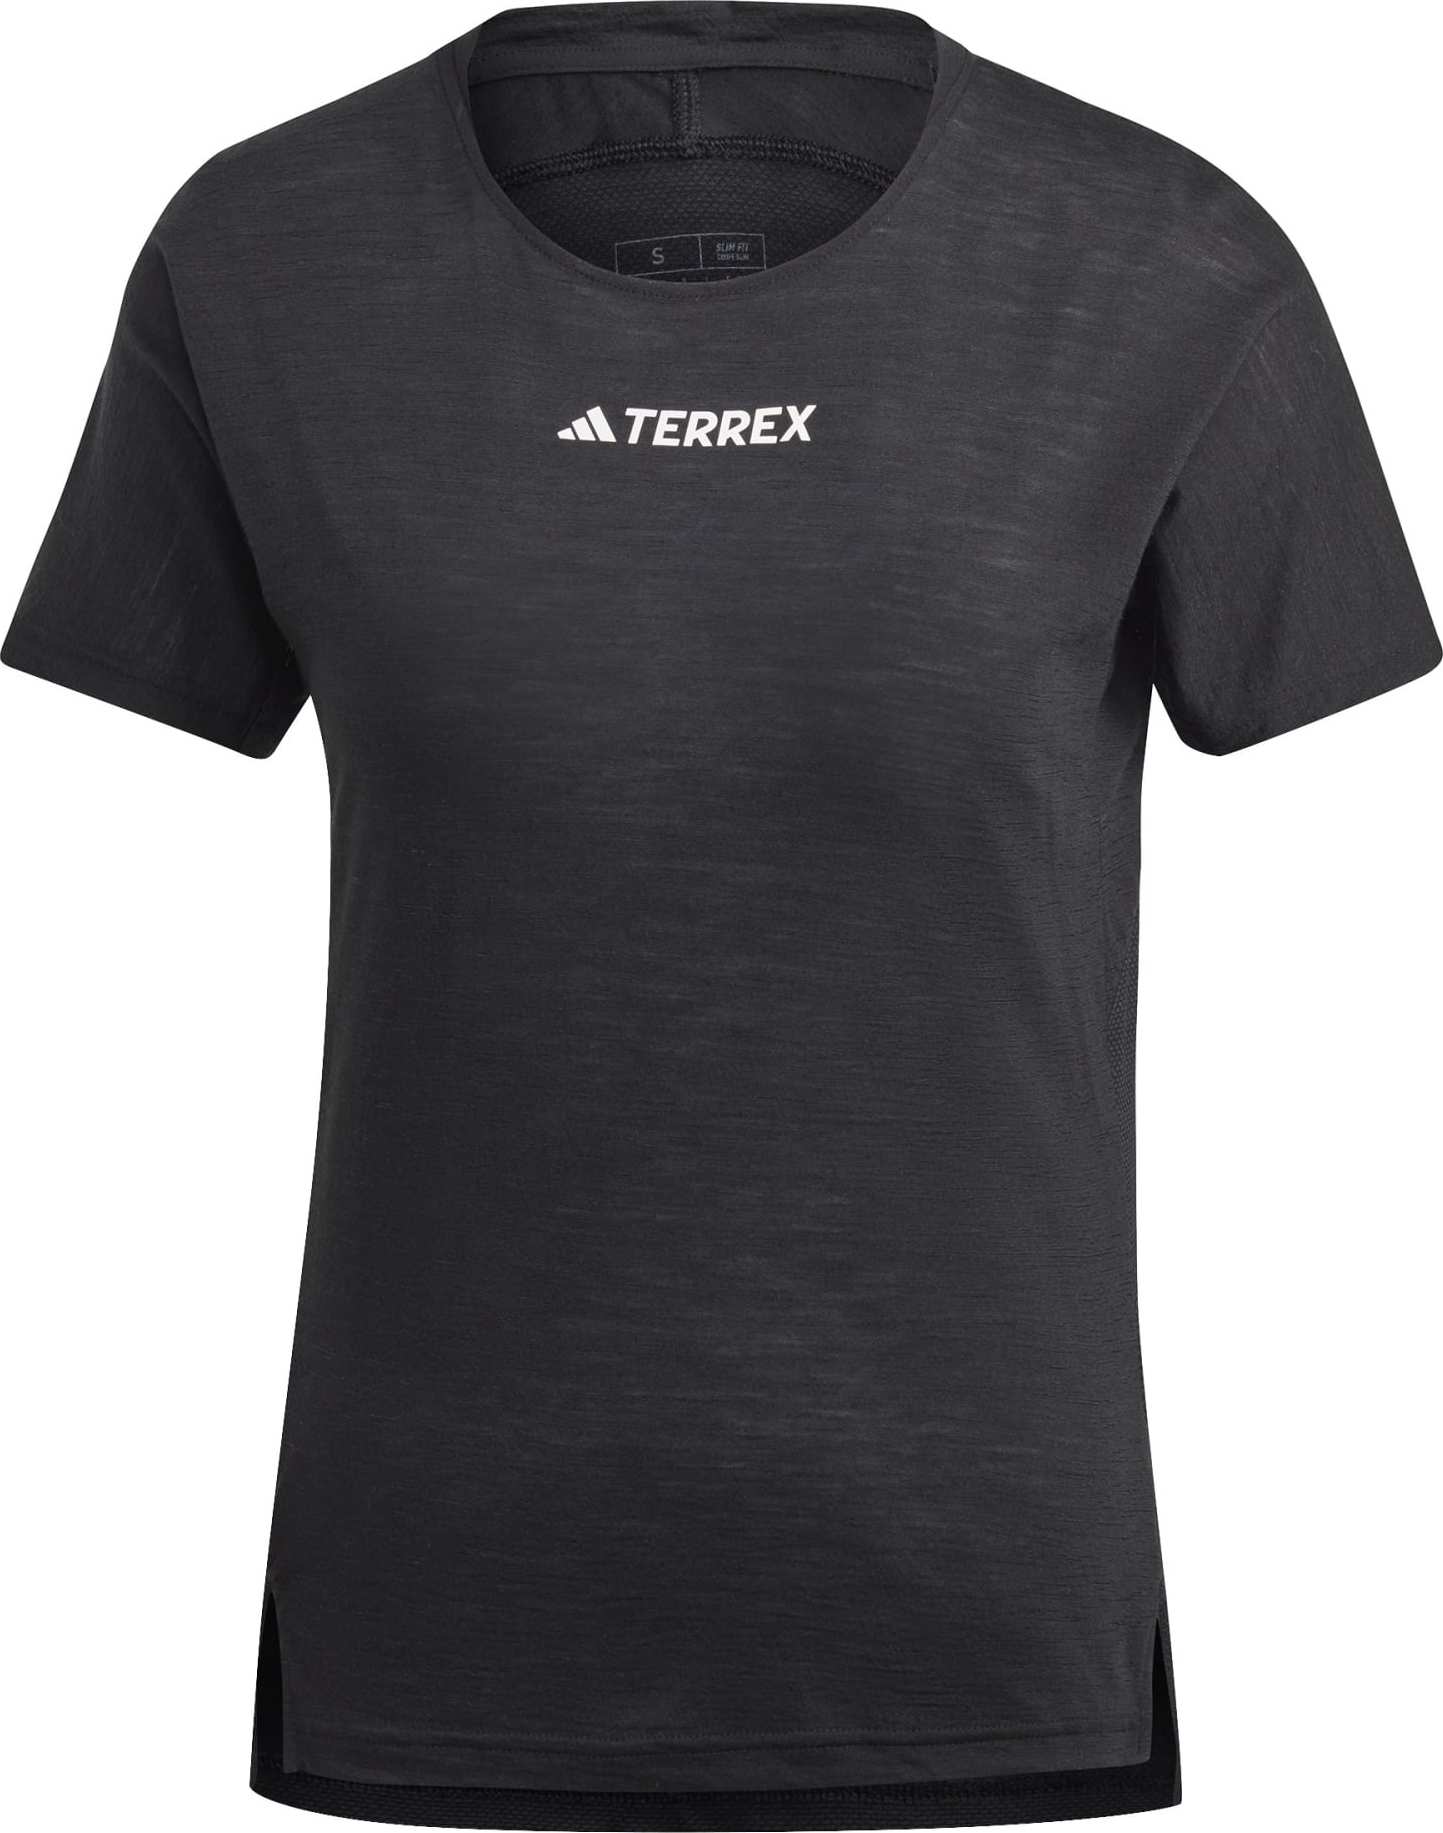 Adidas Adidas Women's Terrex Agravic Pro Wool Trail Running T-Shirt Black XL, BLACK